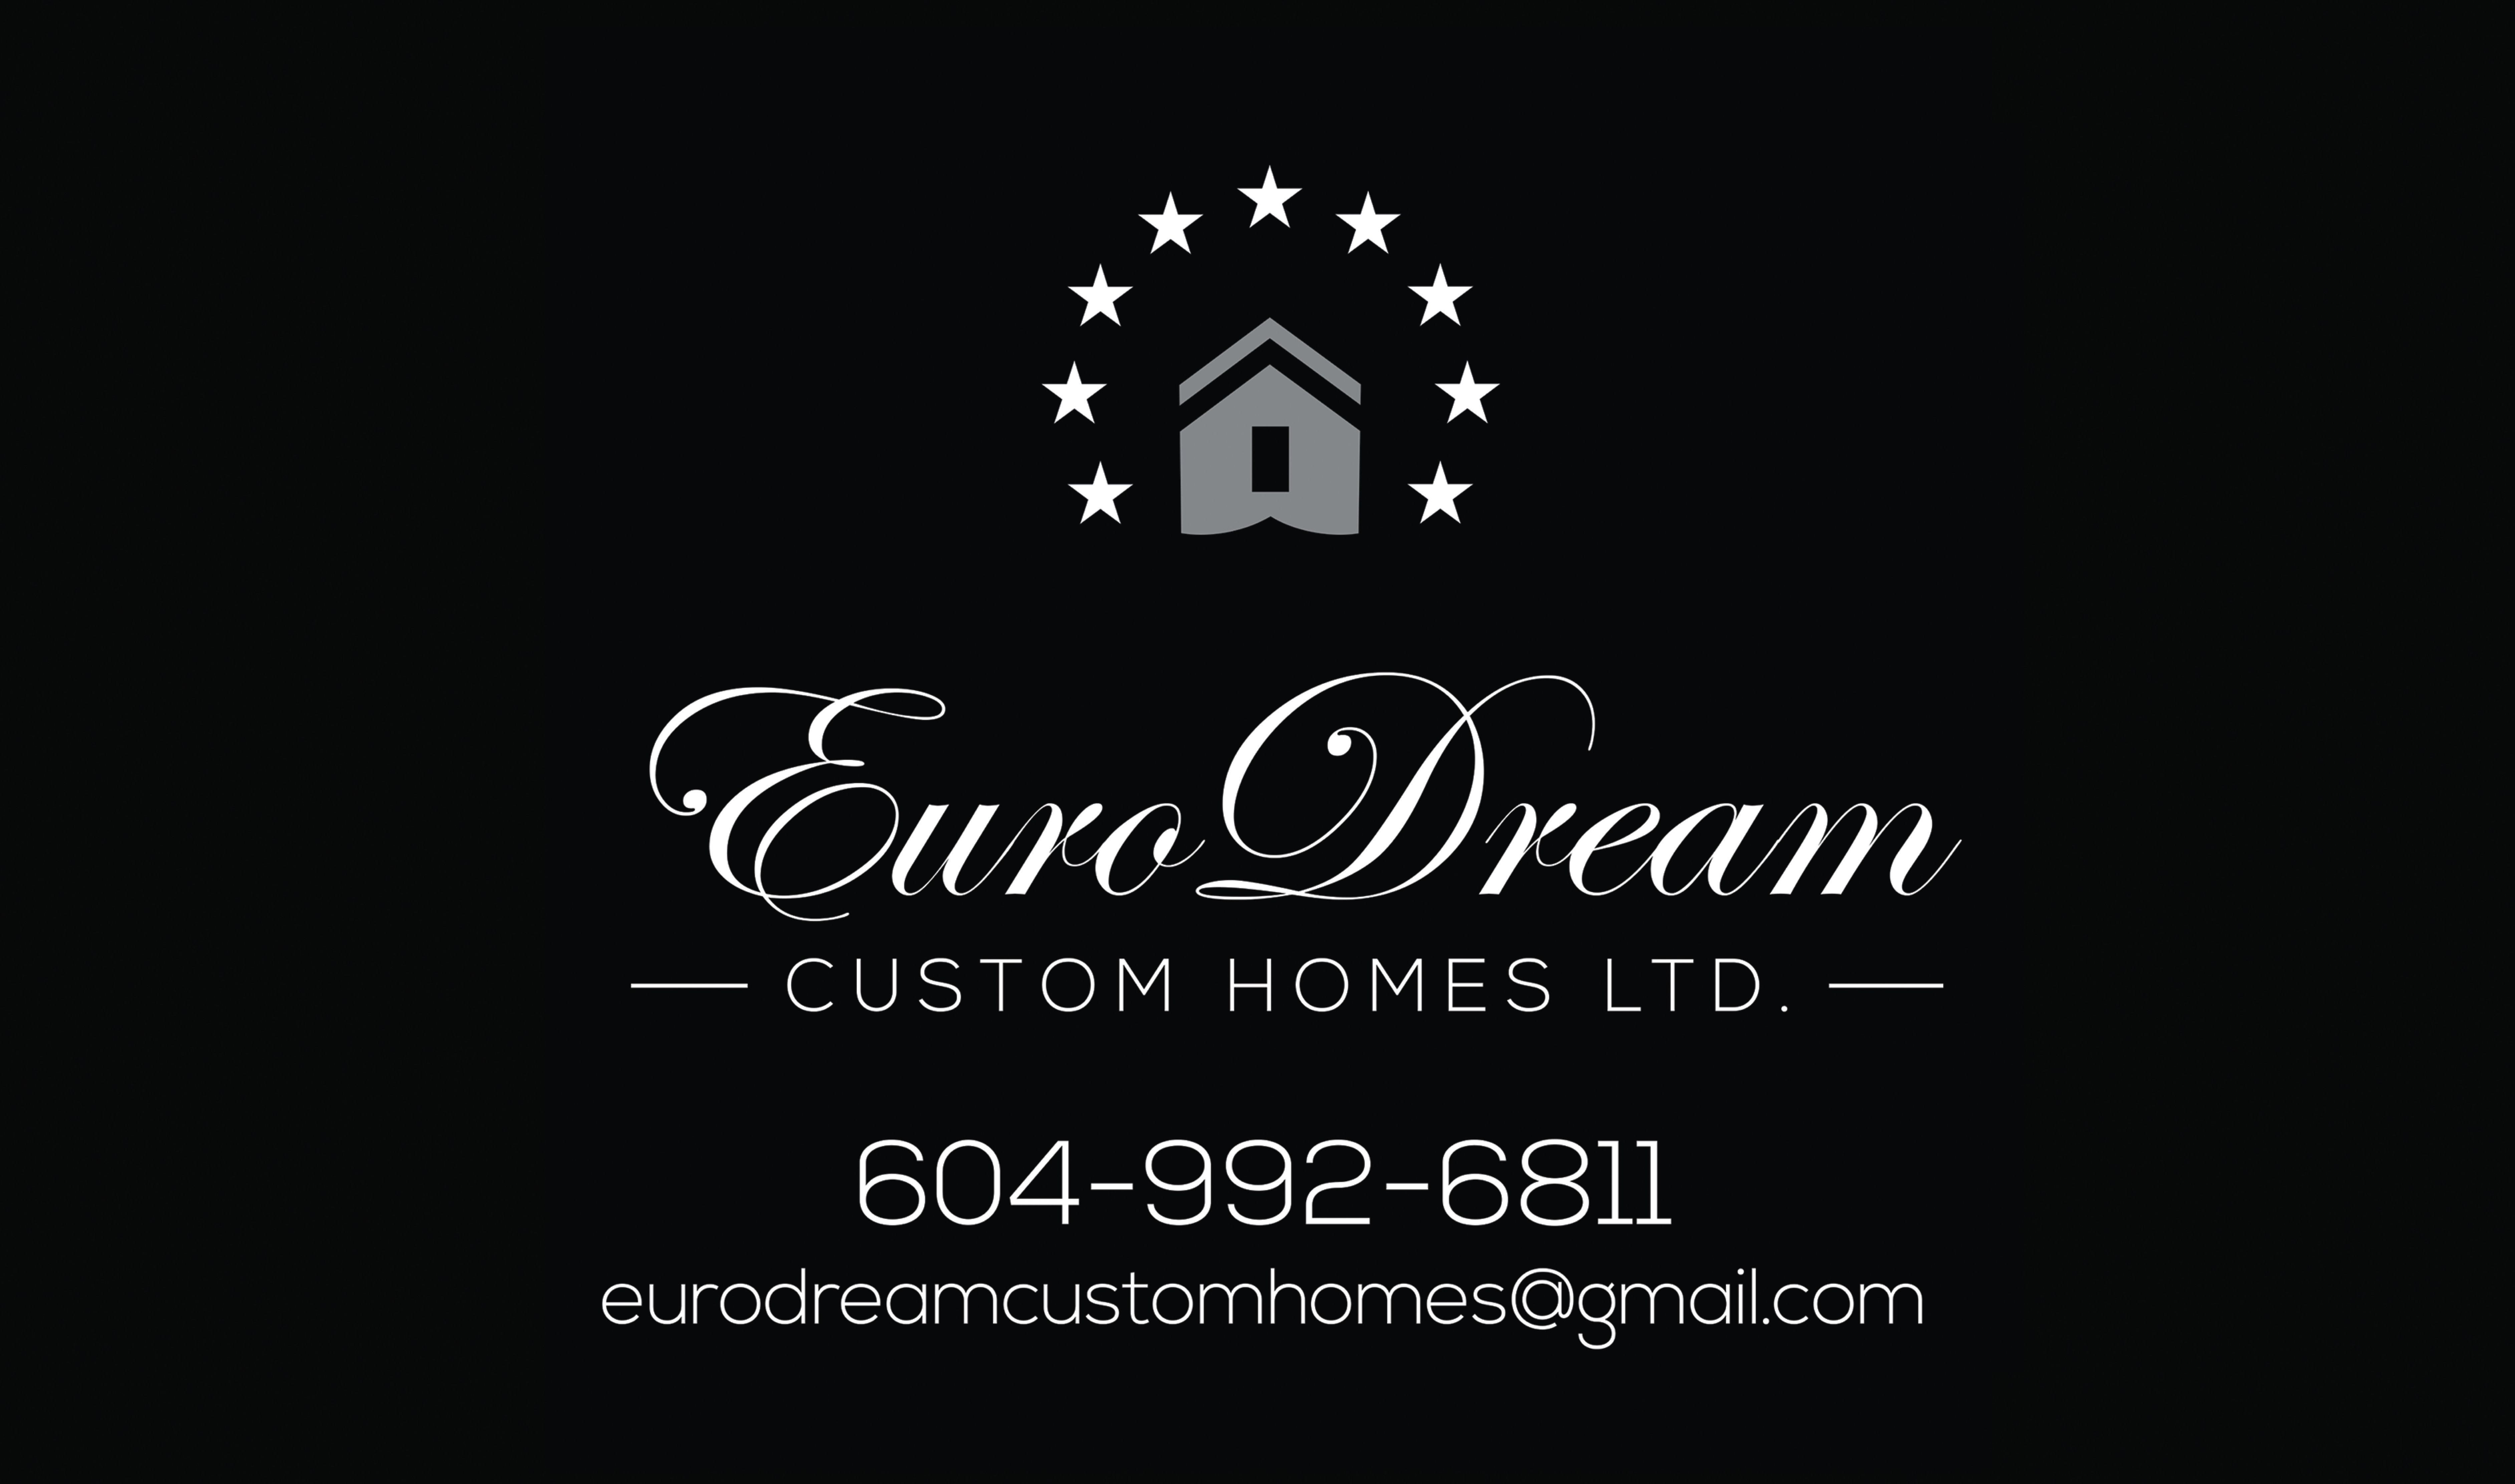 Euro Dream Custom Homes